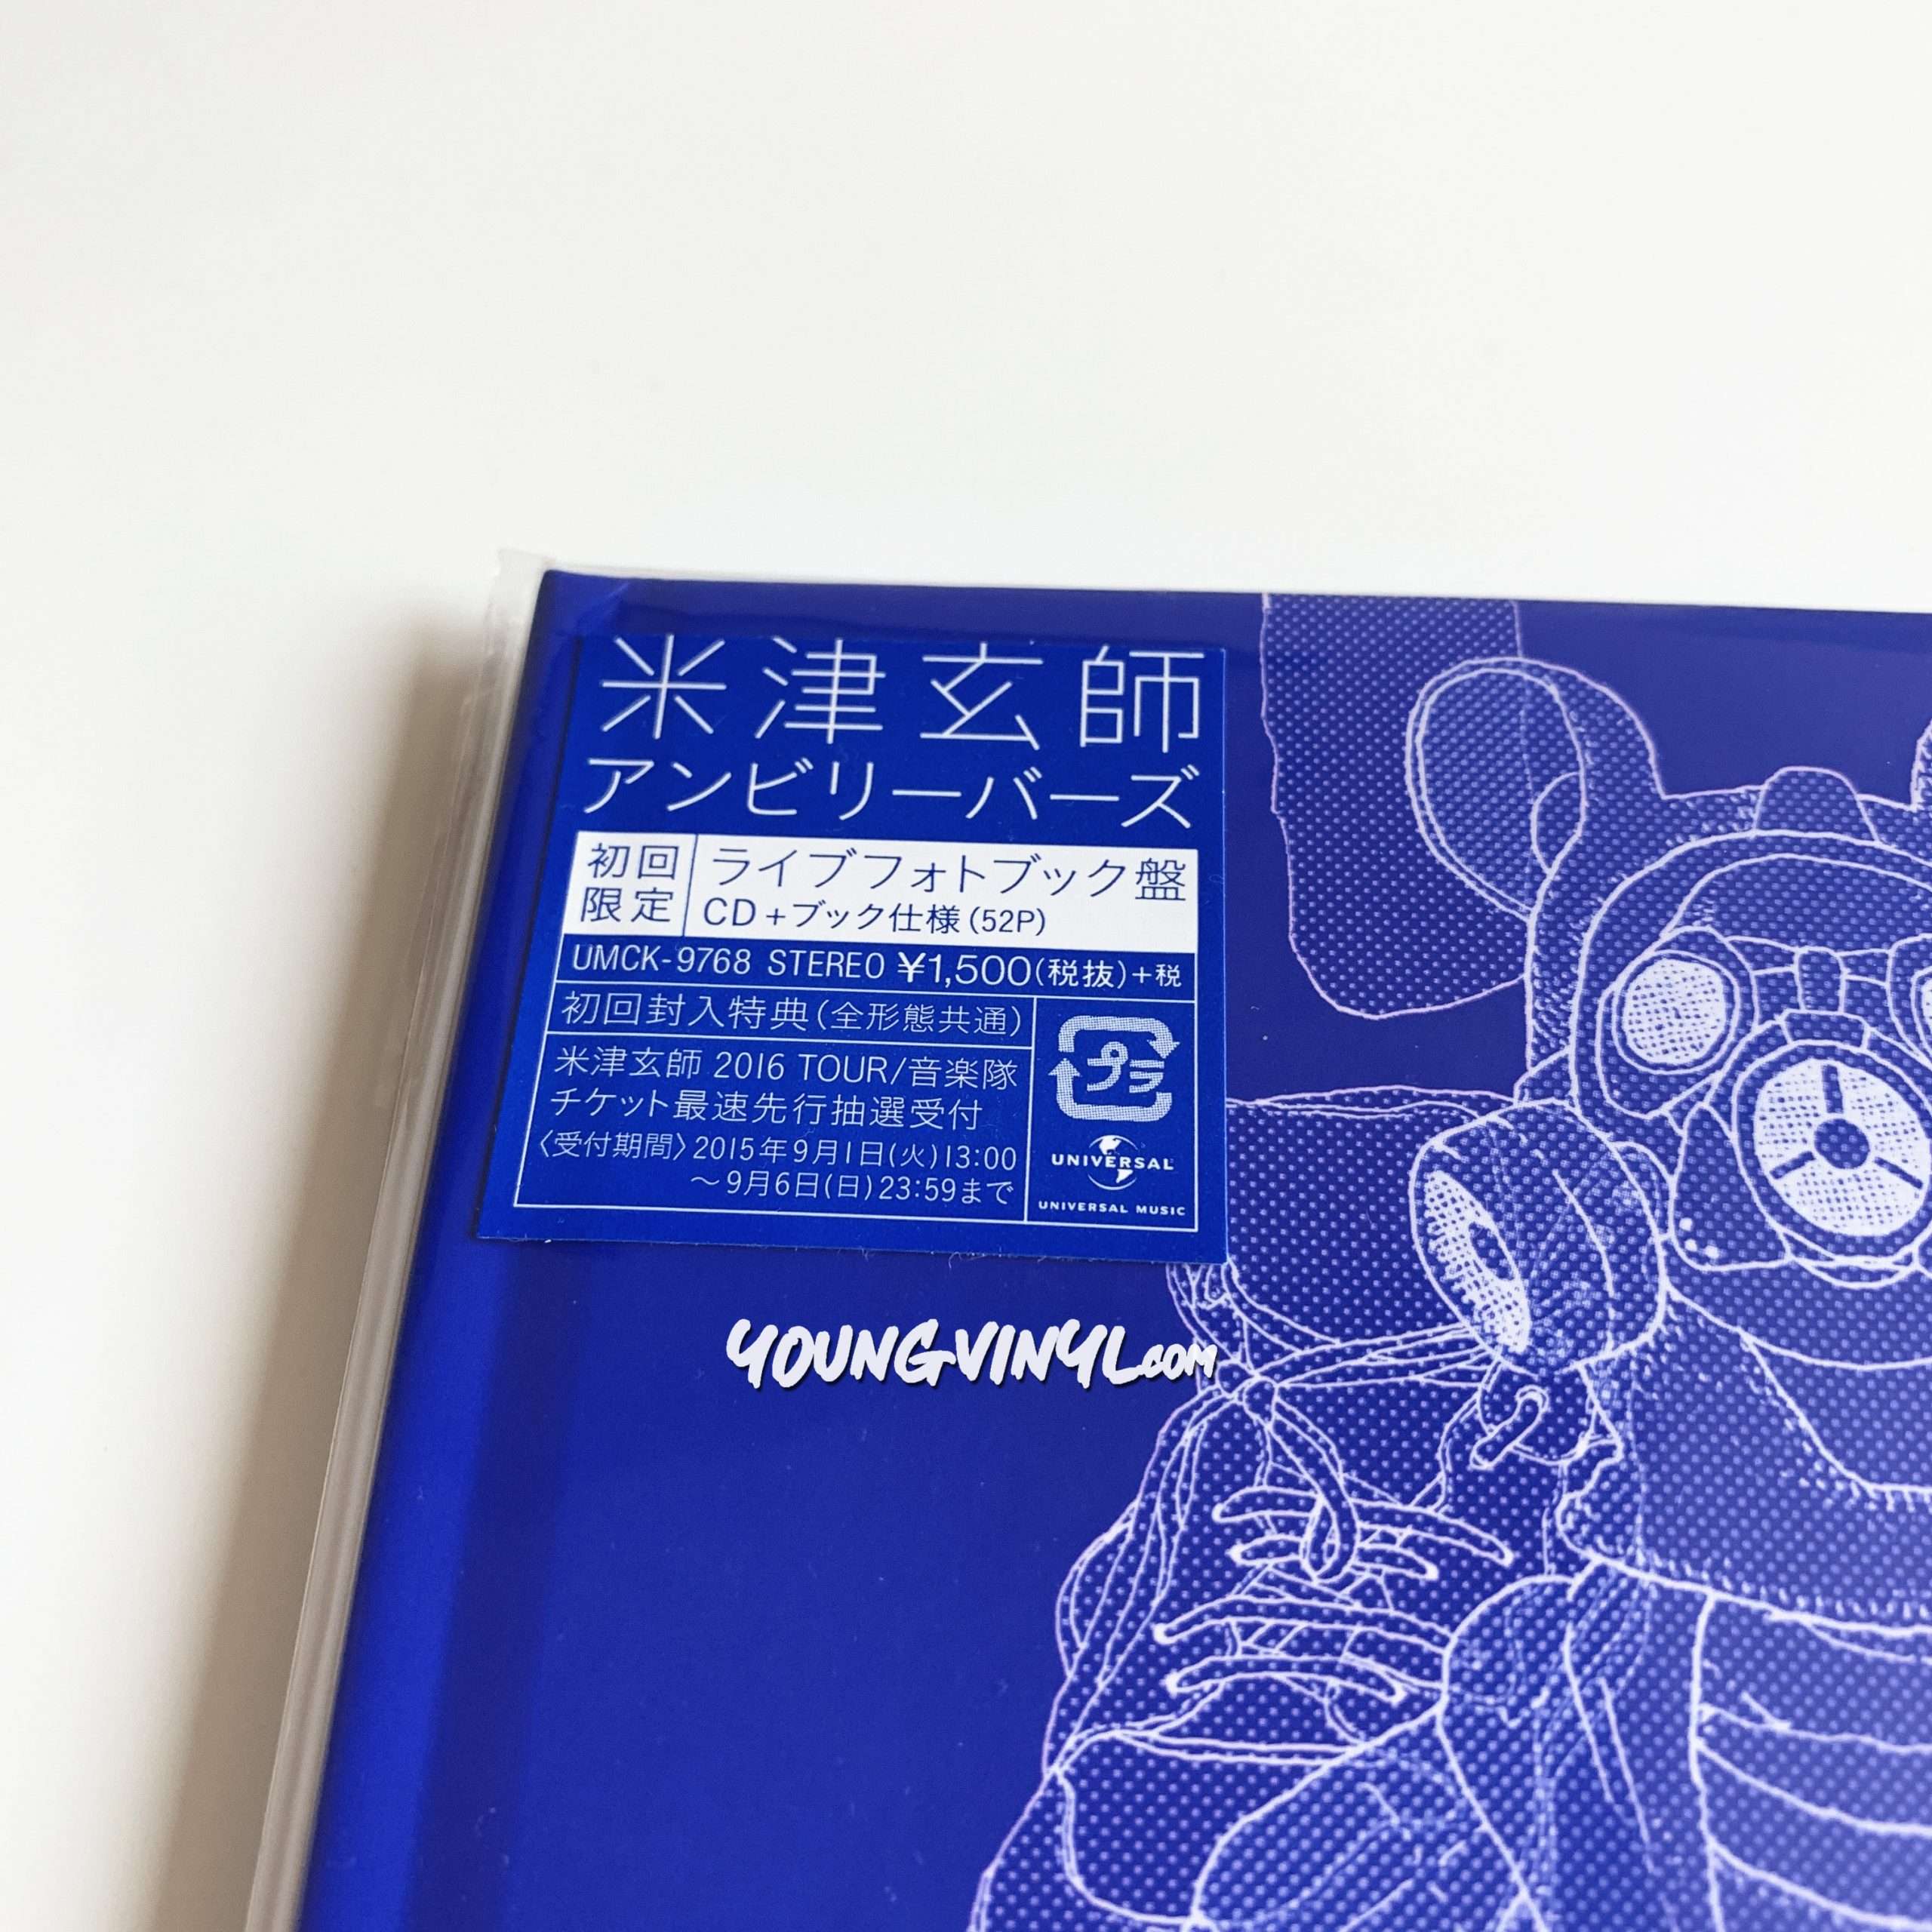 Kenshi Yonezu UNBELIEVERS CD Limited Edition Sealed 米津玄師 